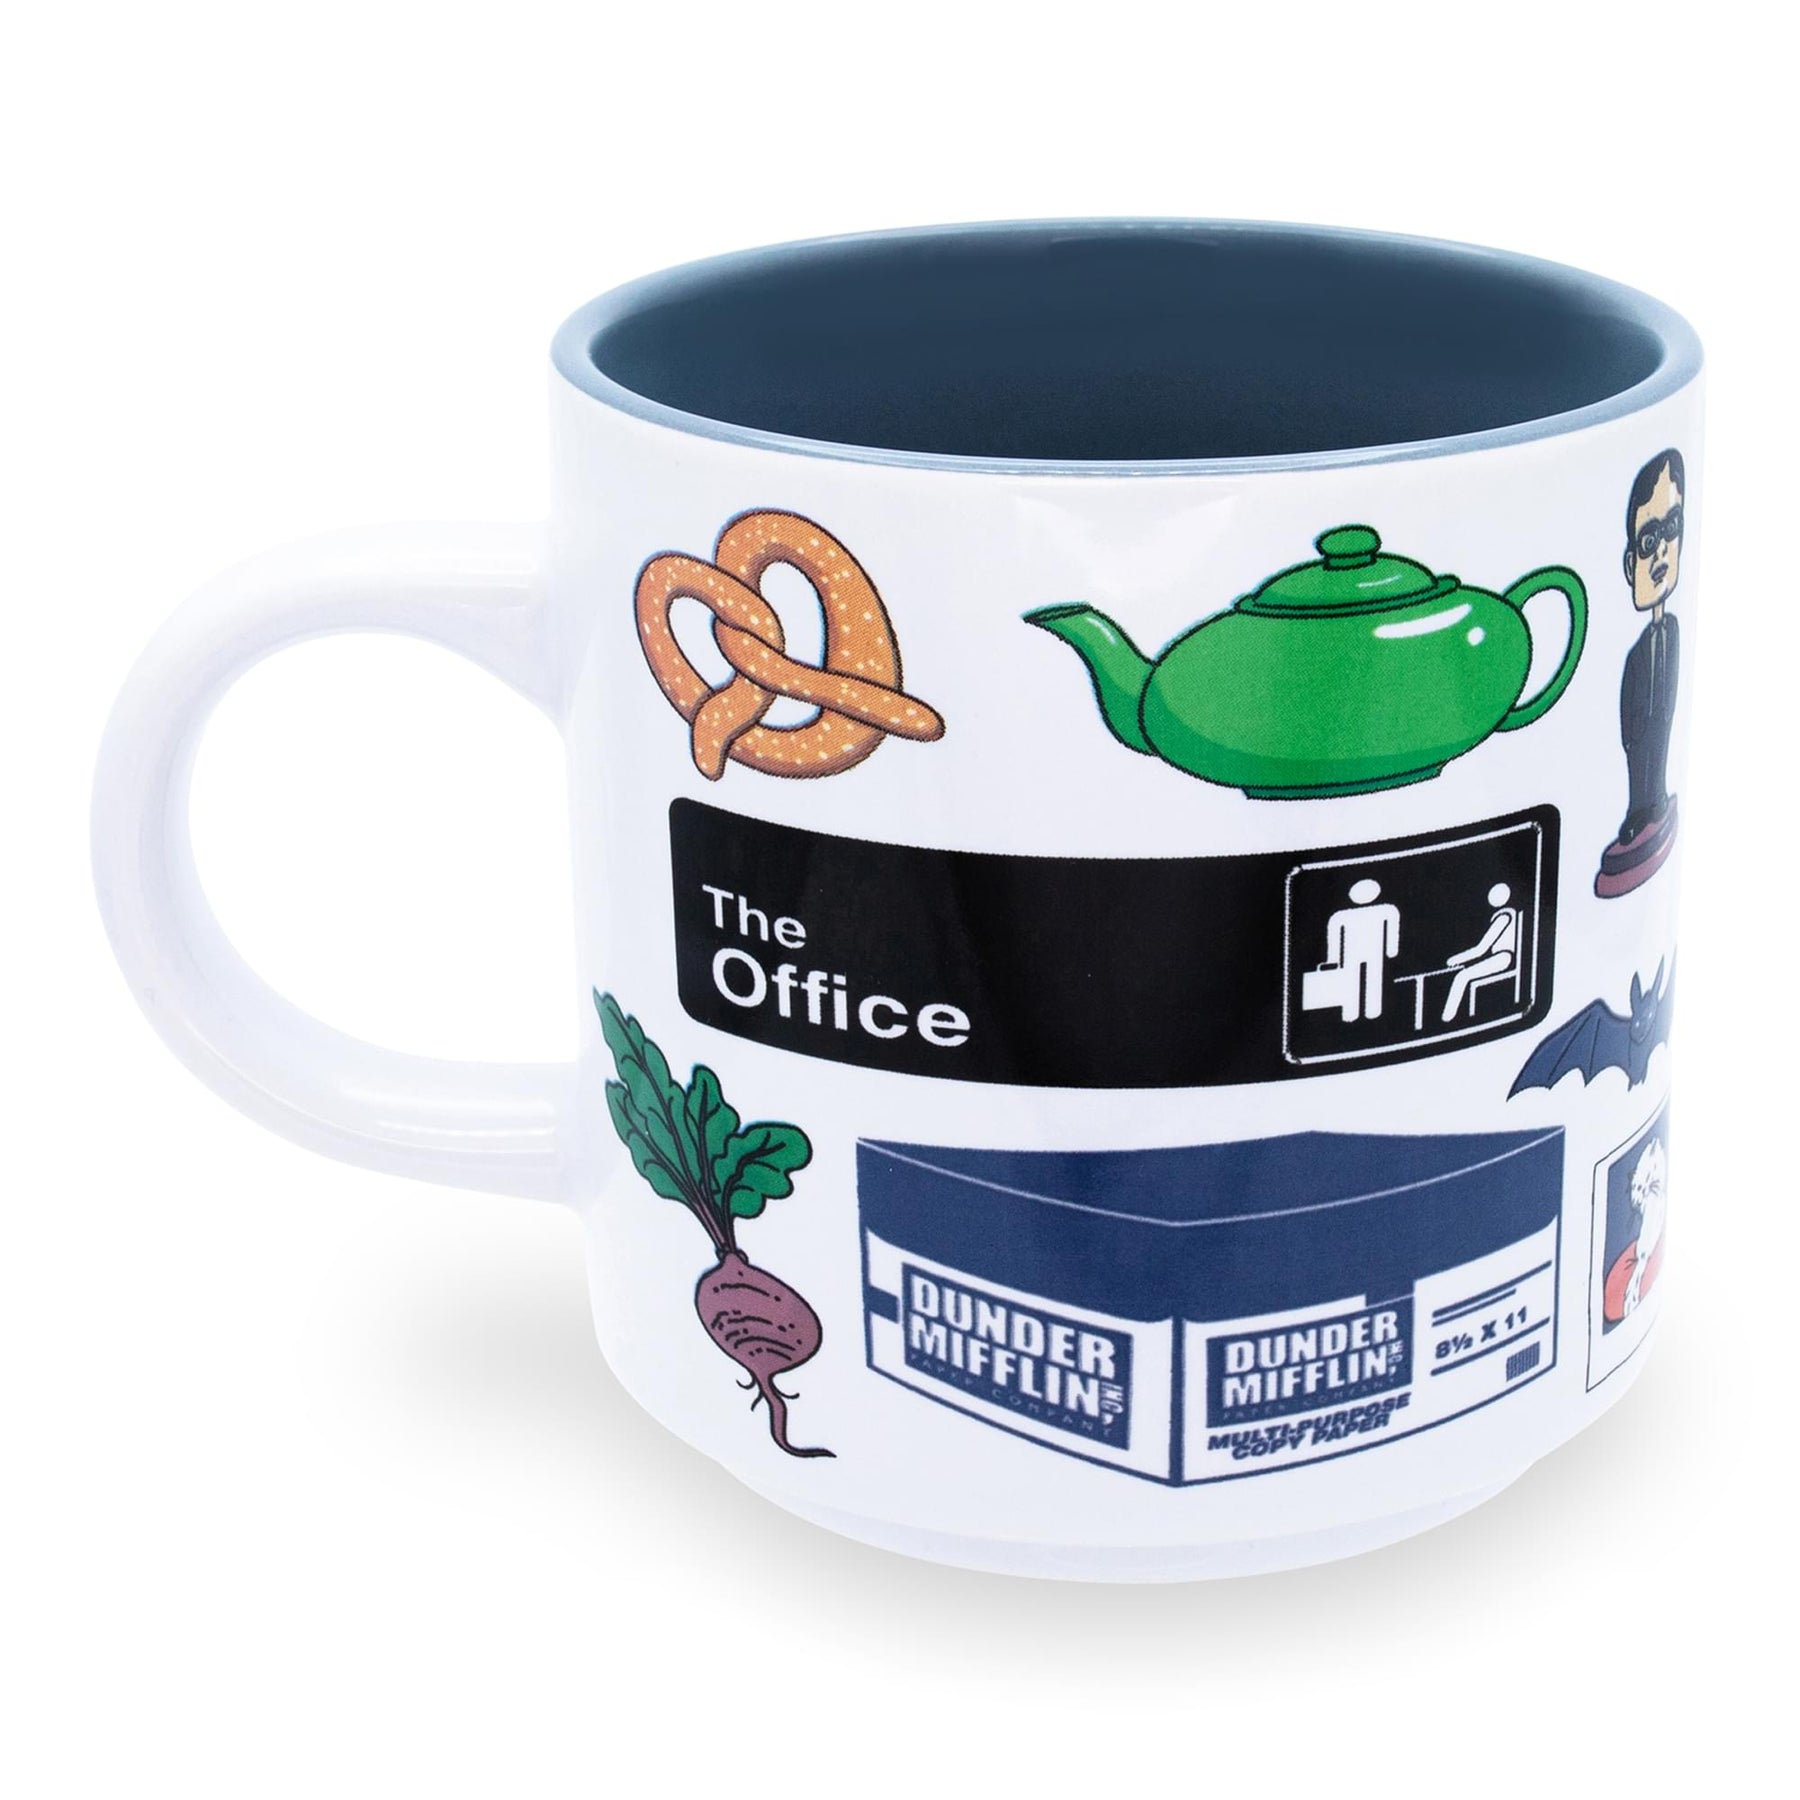 The Office Icons Ceramic Mug | Holds 13 Ounces